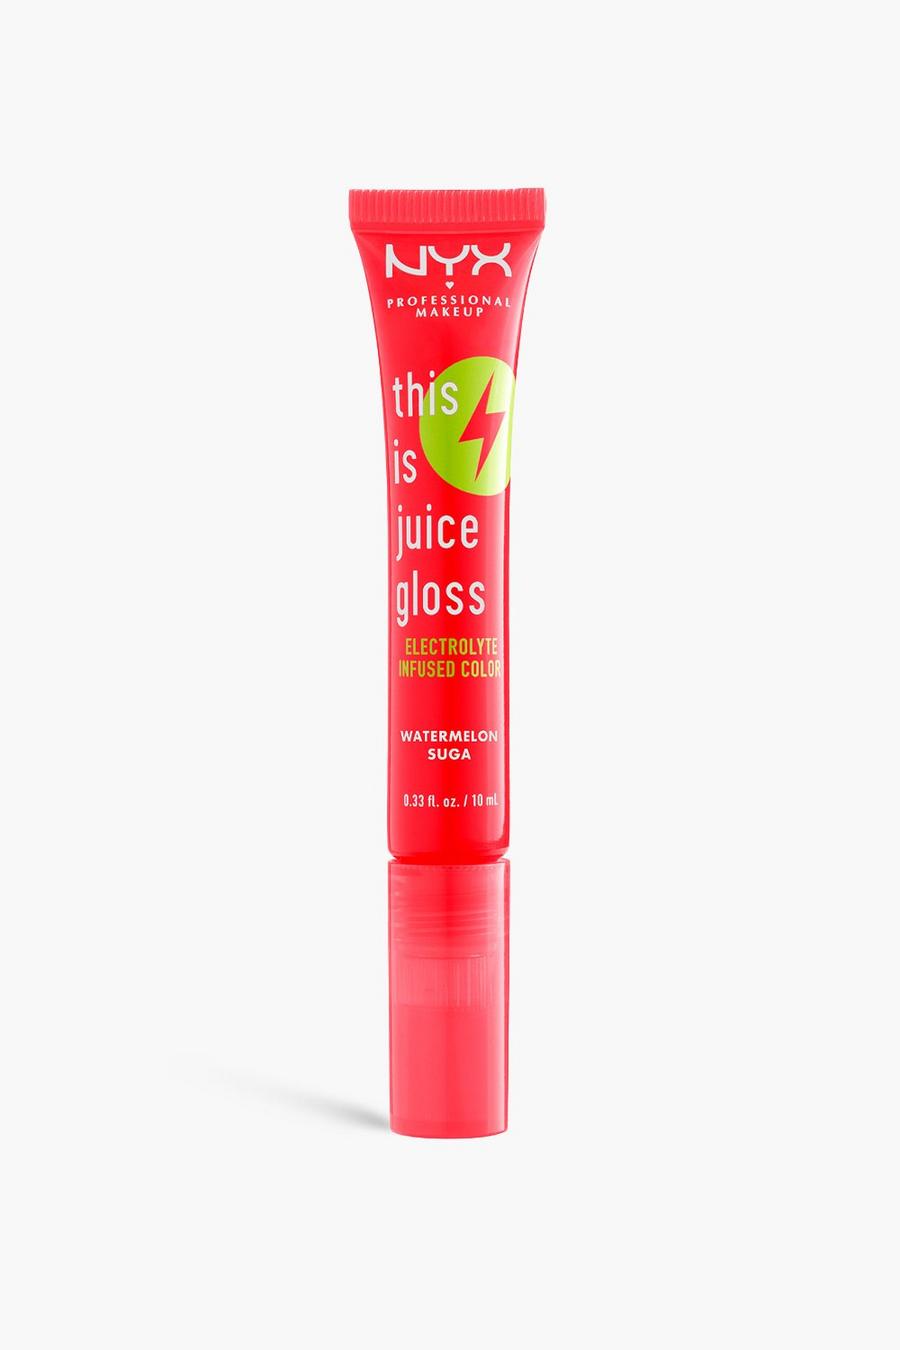 NYX Professional Makeup This Is Juice Gloss, 02 watermelon suga